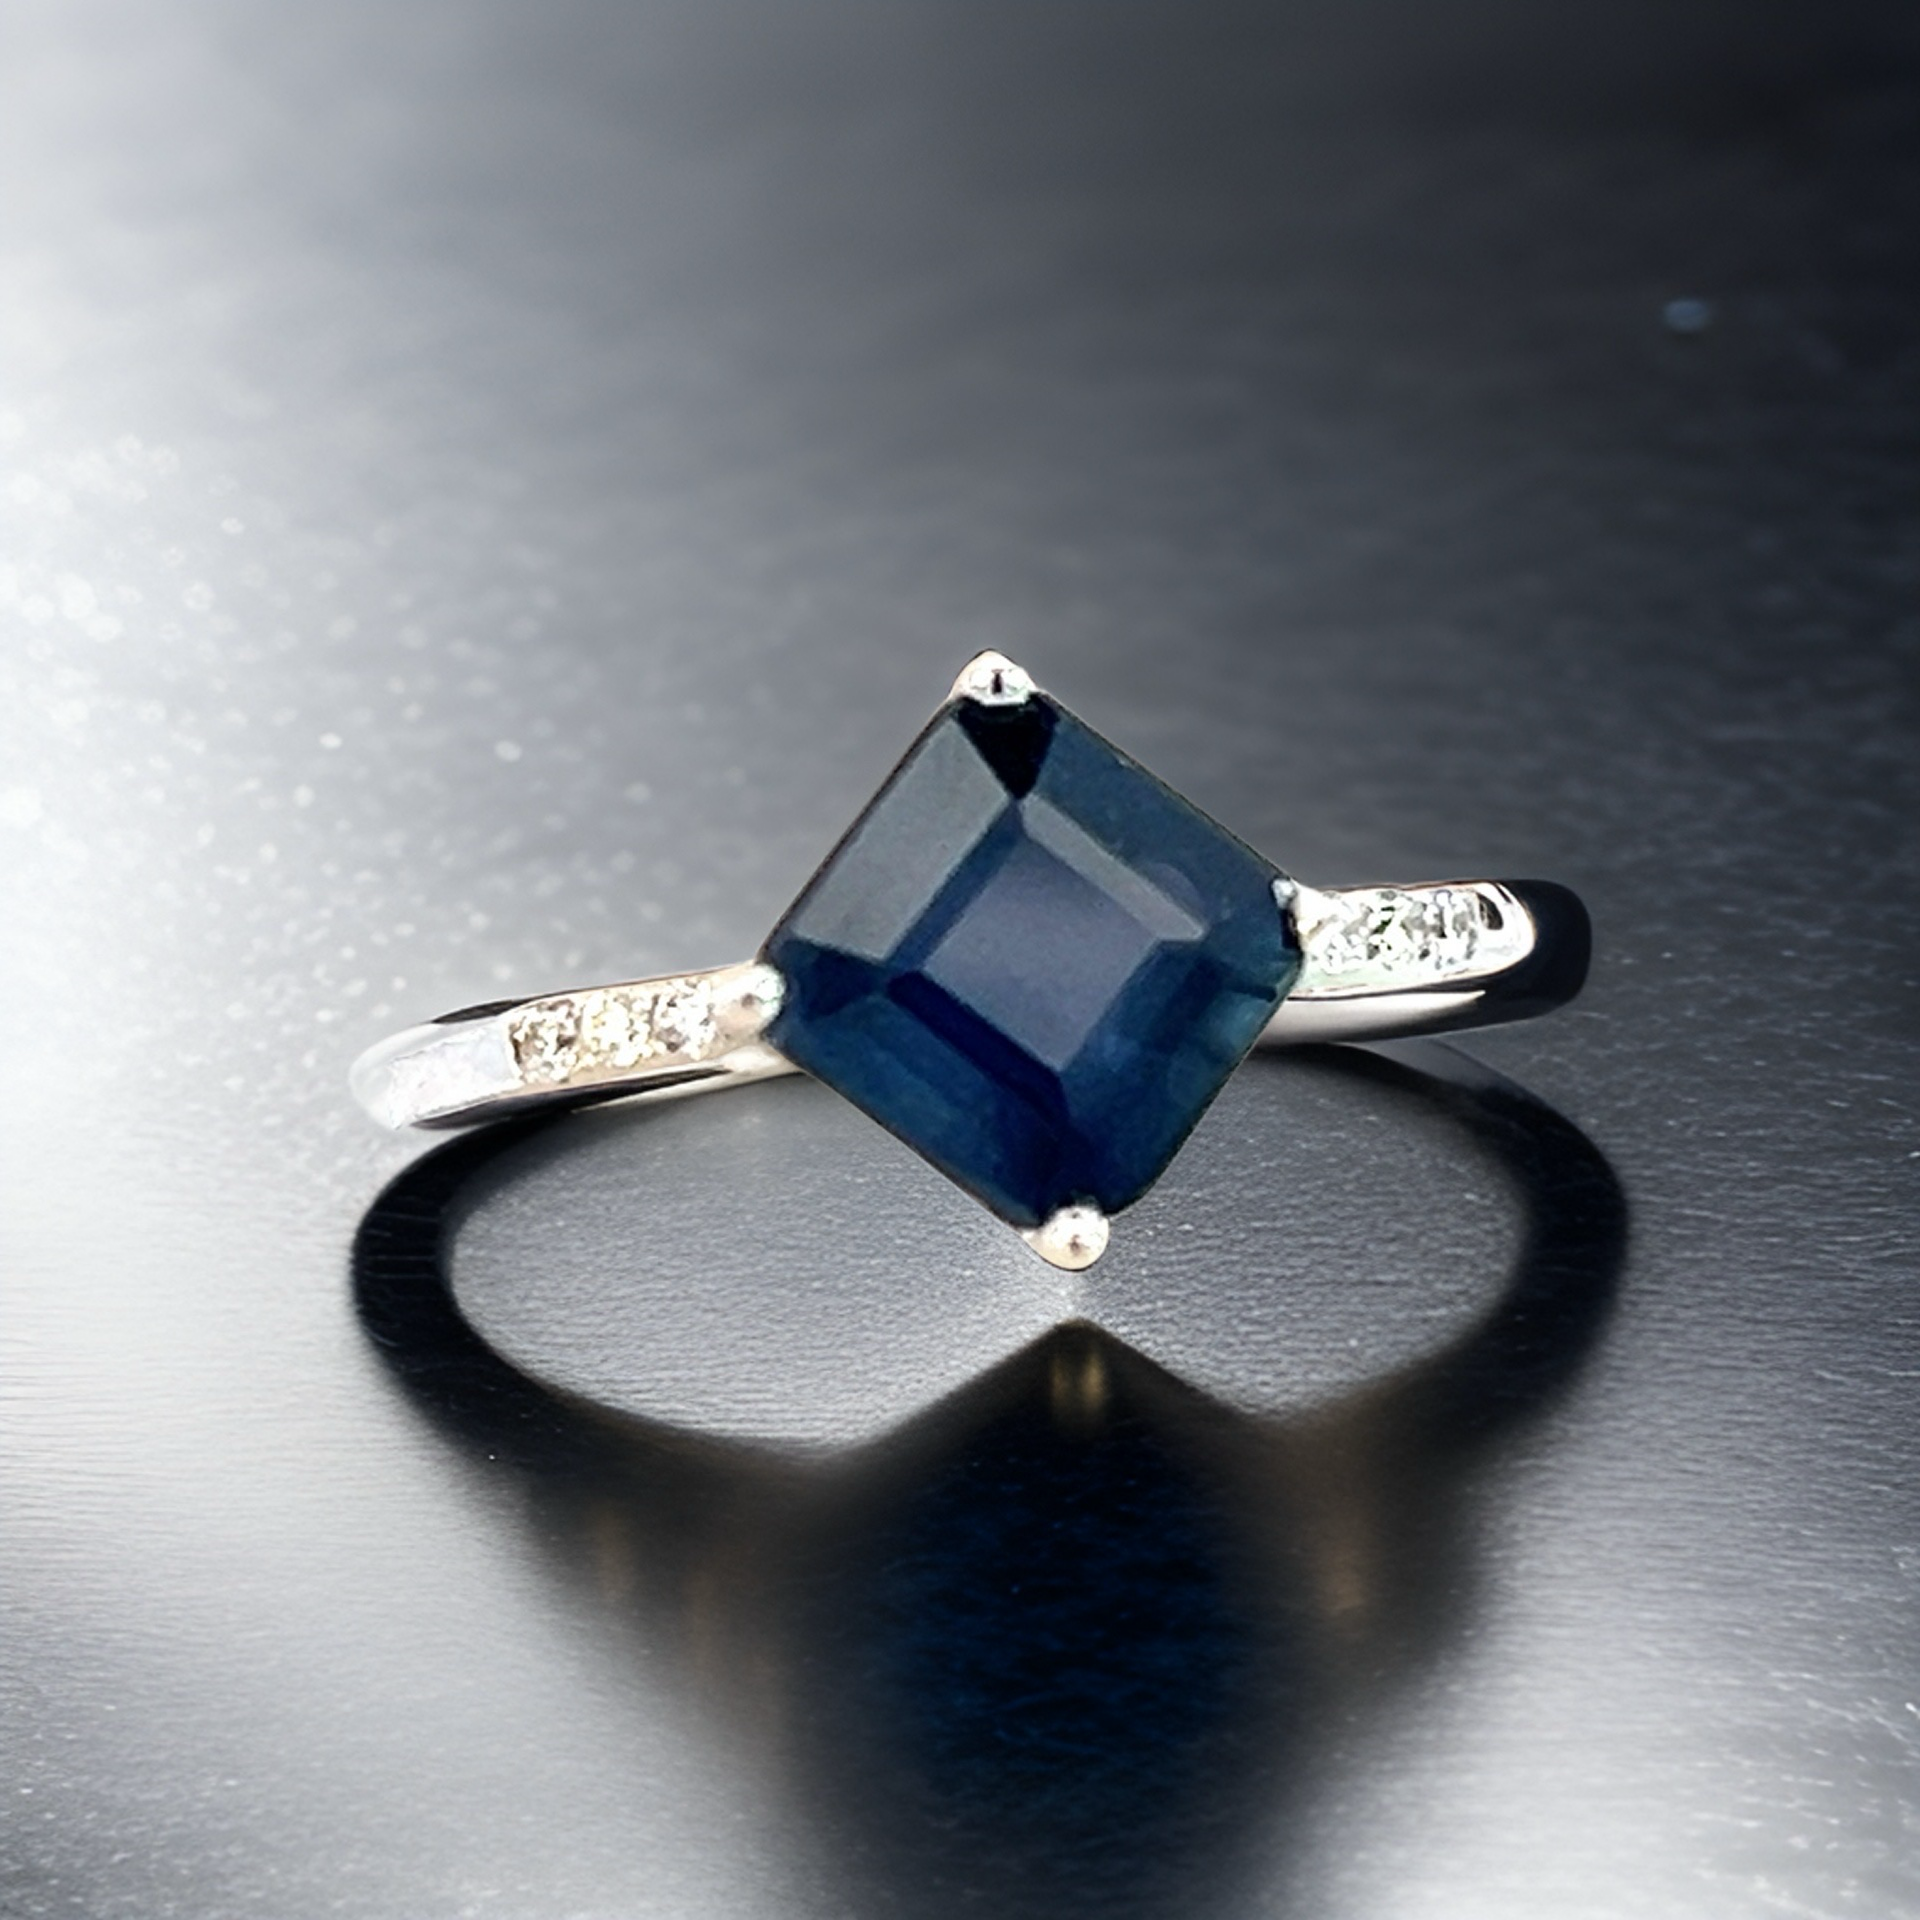 Natural Sapphire Diamond Ring 6.25 14k WG 2.24 TCW Certified $3,950 310591 - Certified Fine Jewelry